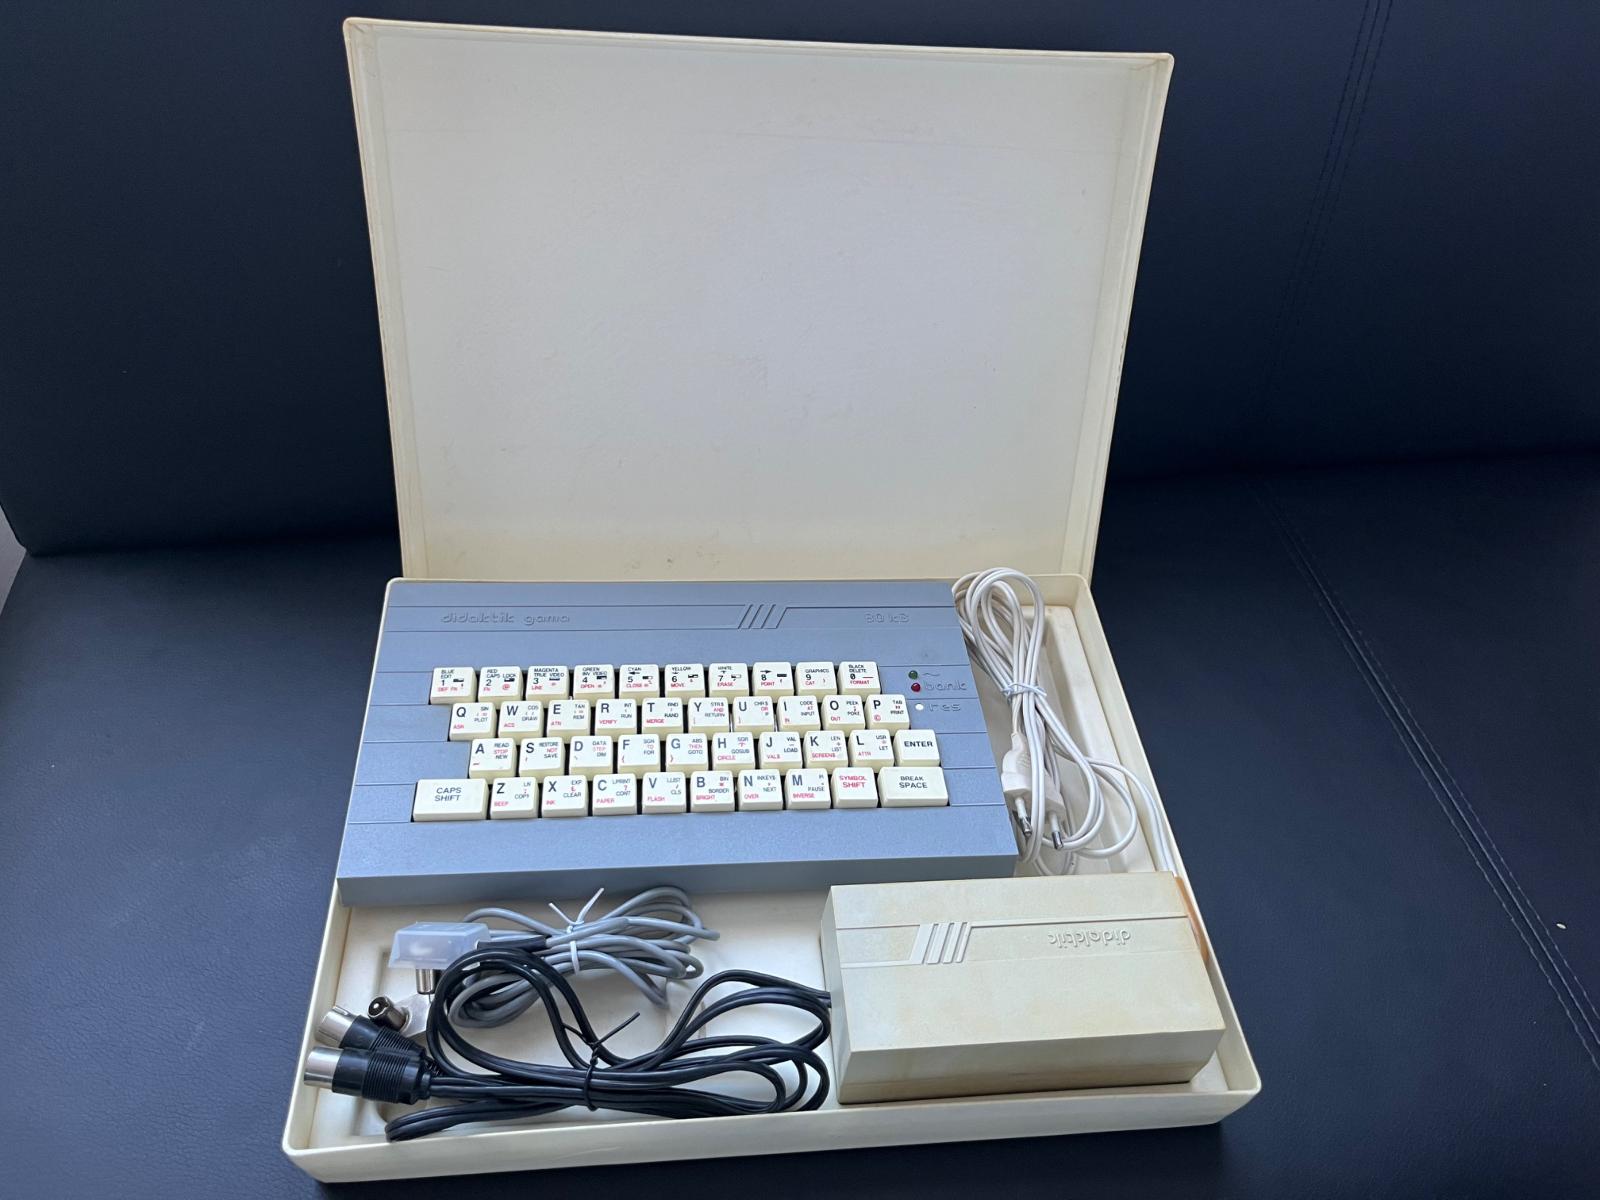 Didaktik Gama 1989 - Počítače a hry